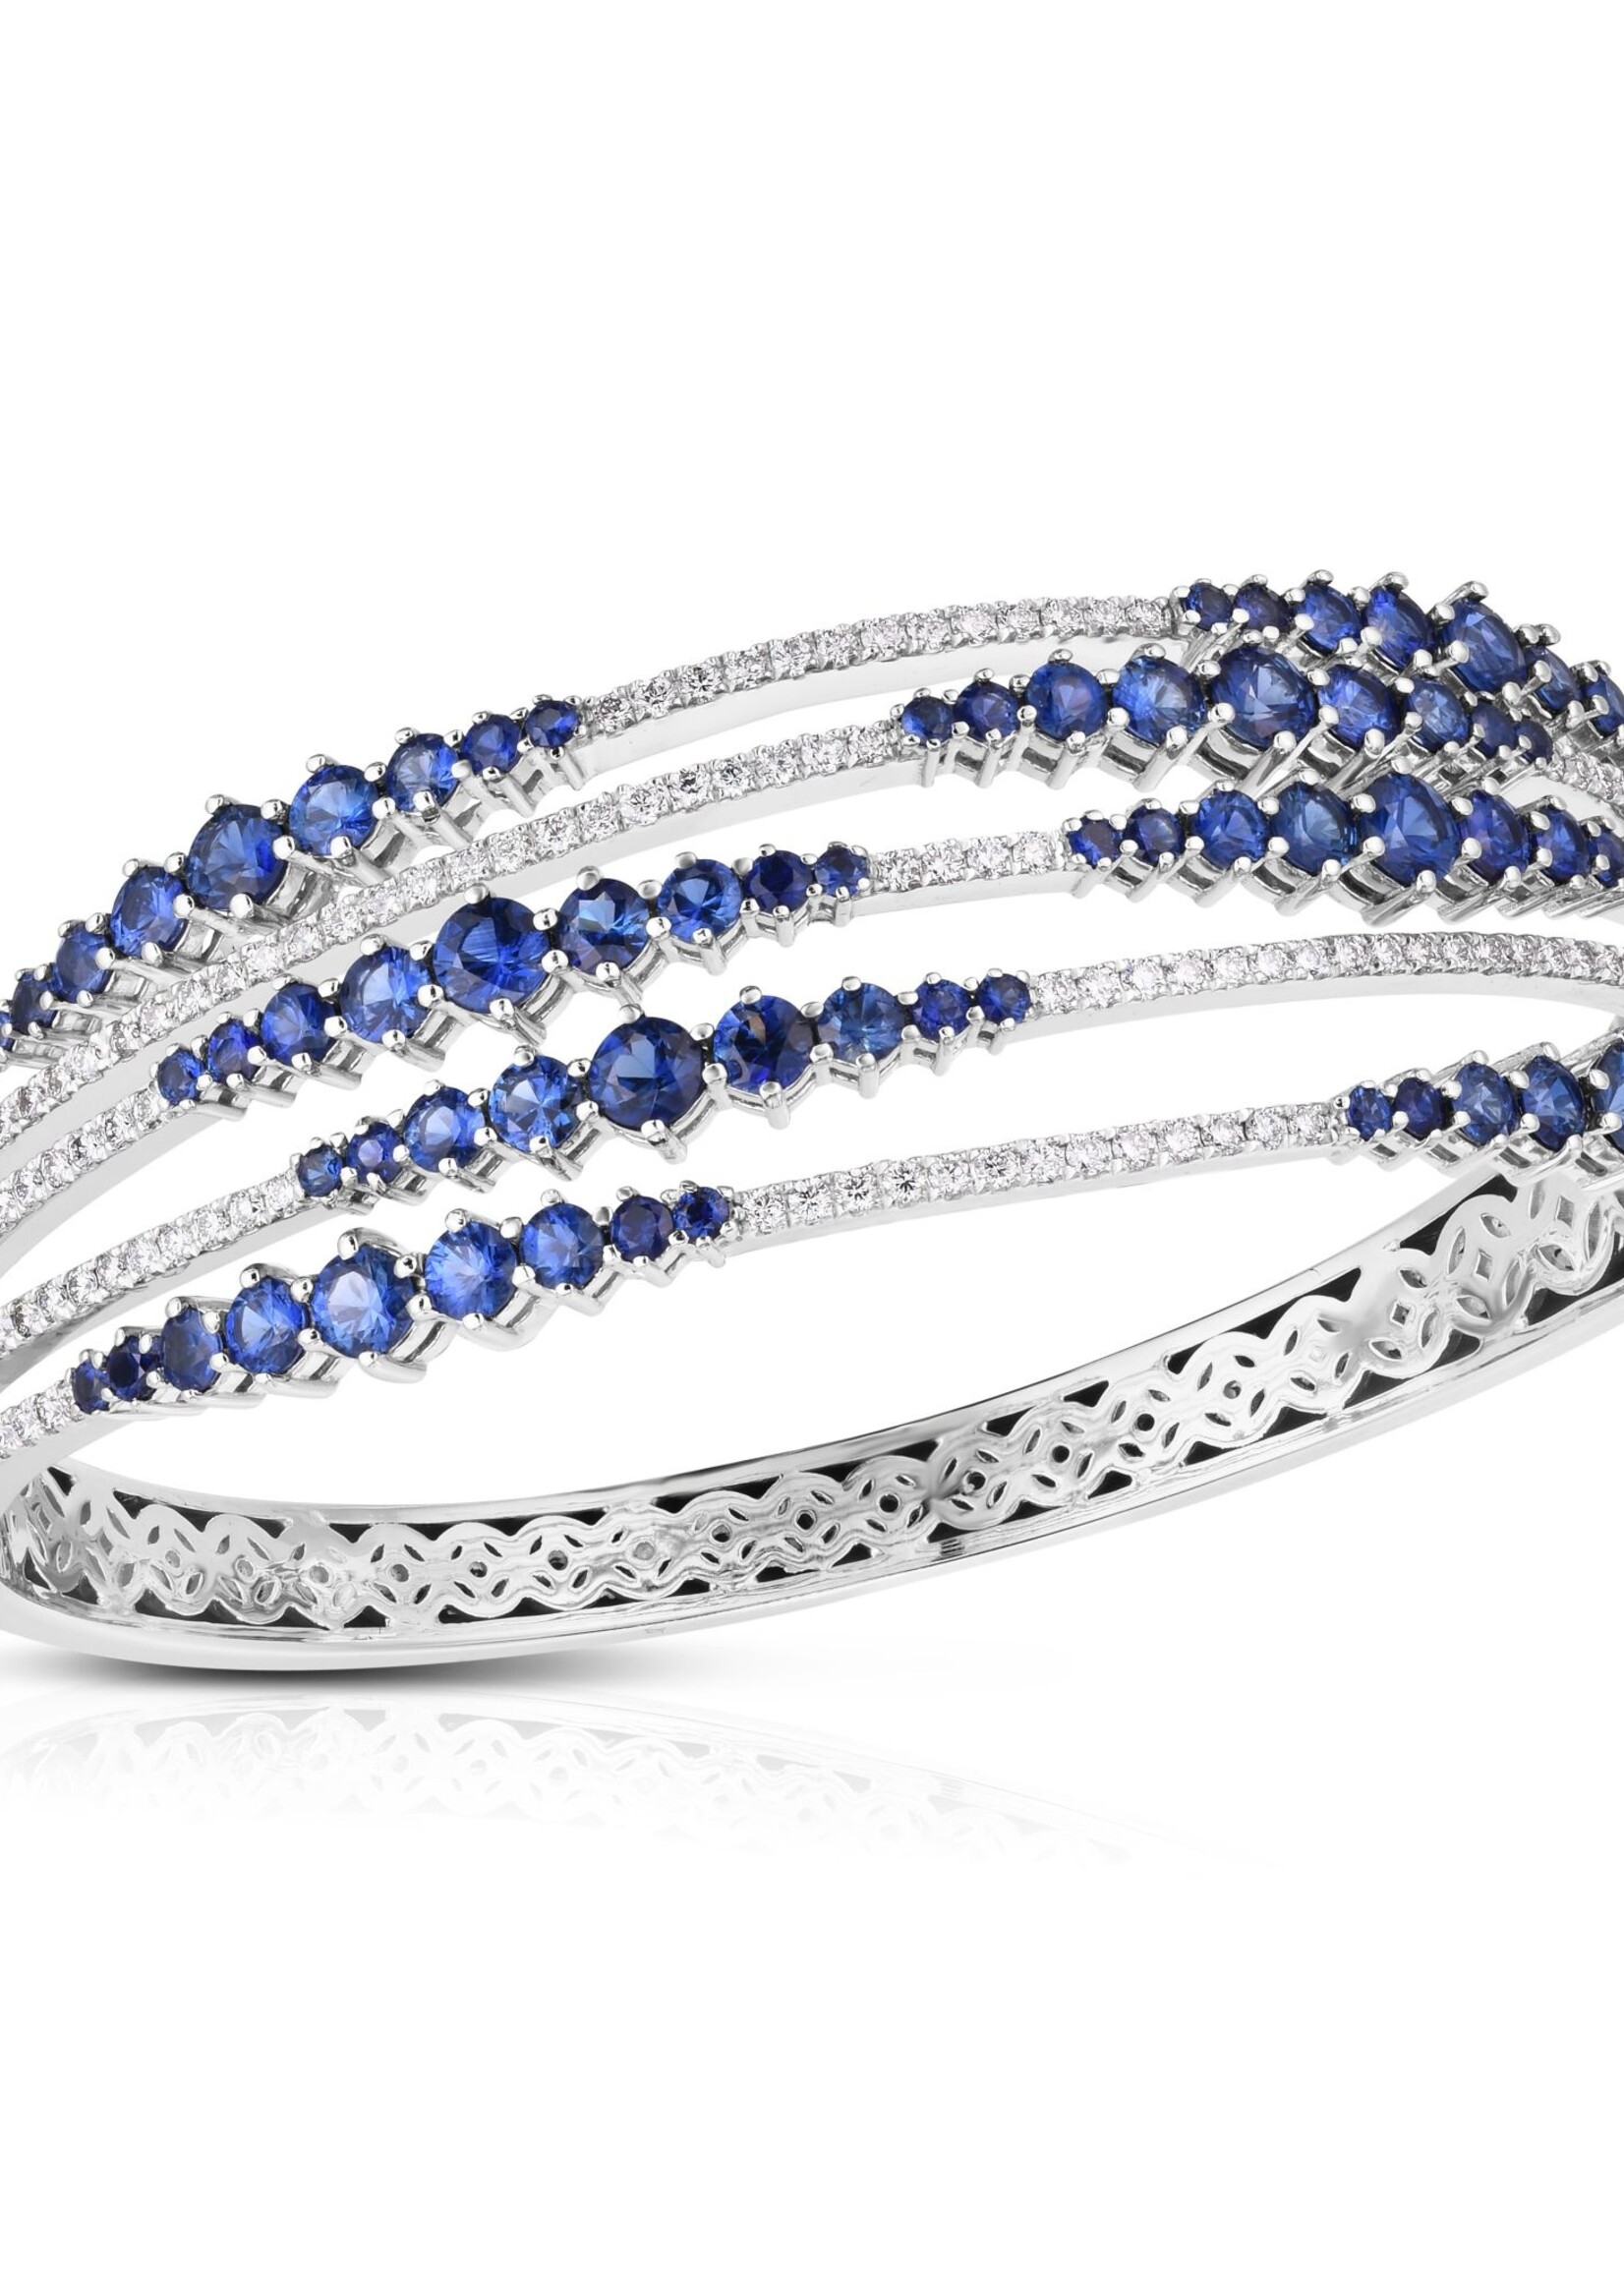 14kW 5.75ct Sapphires 1.63ctw Diamond Hinged Cuff Bracelet, Very Fancy!